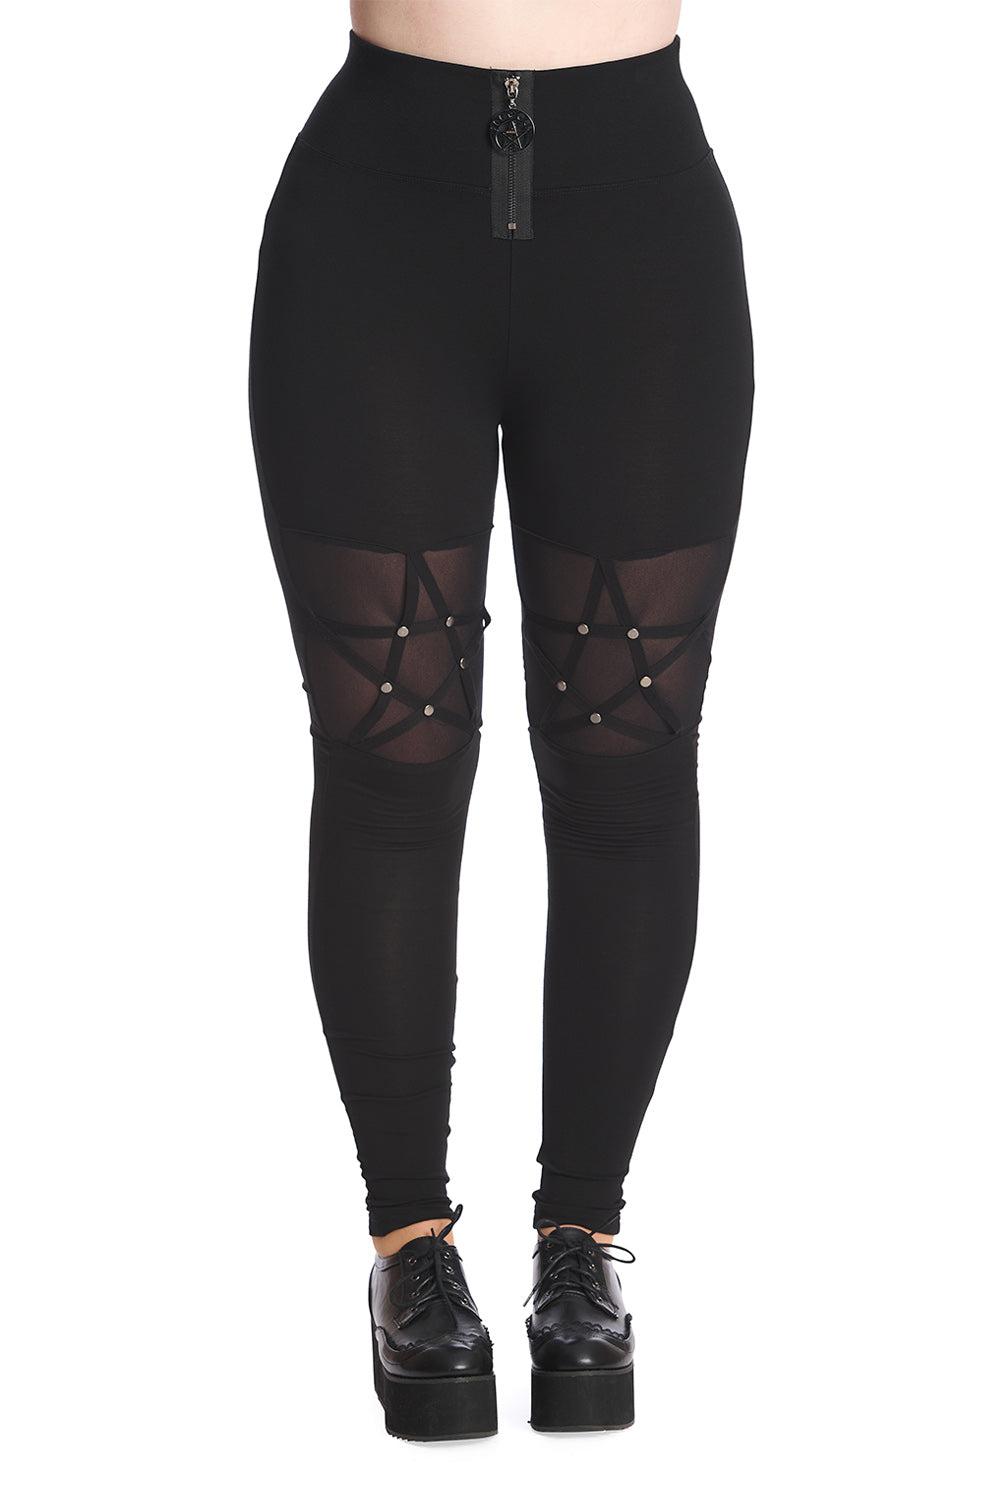 Queen Vix Leggings-Banned-Dark Fashion Clothing